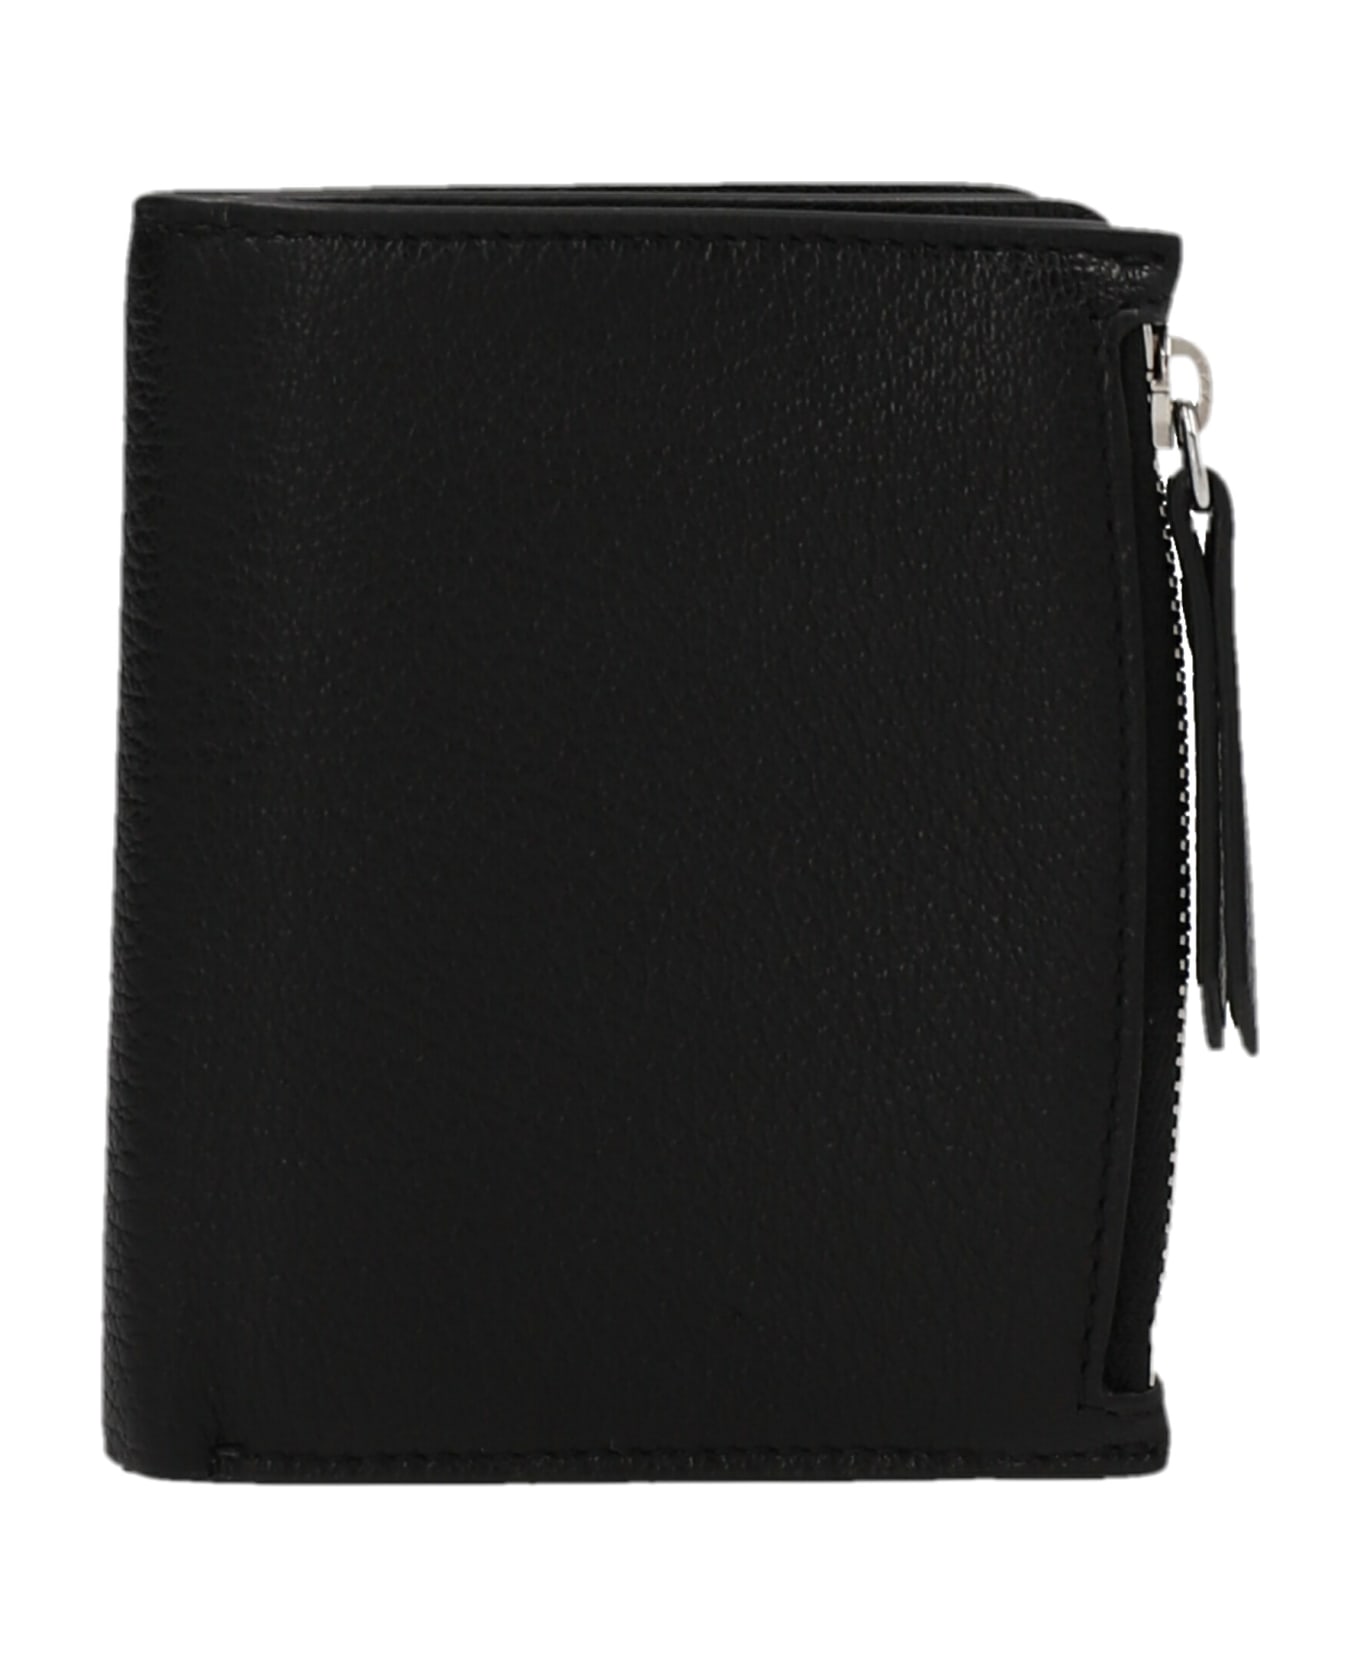 Maison Margiela Stitching Leather Wallet - Black   財布